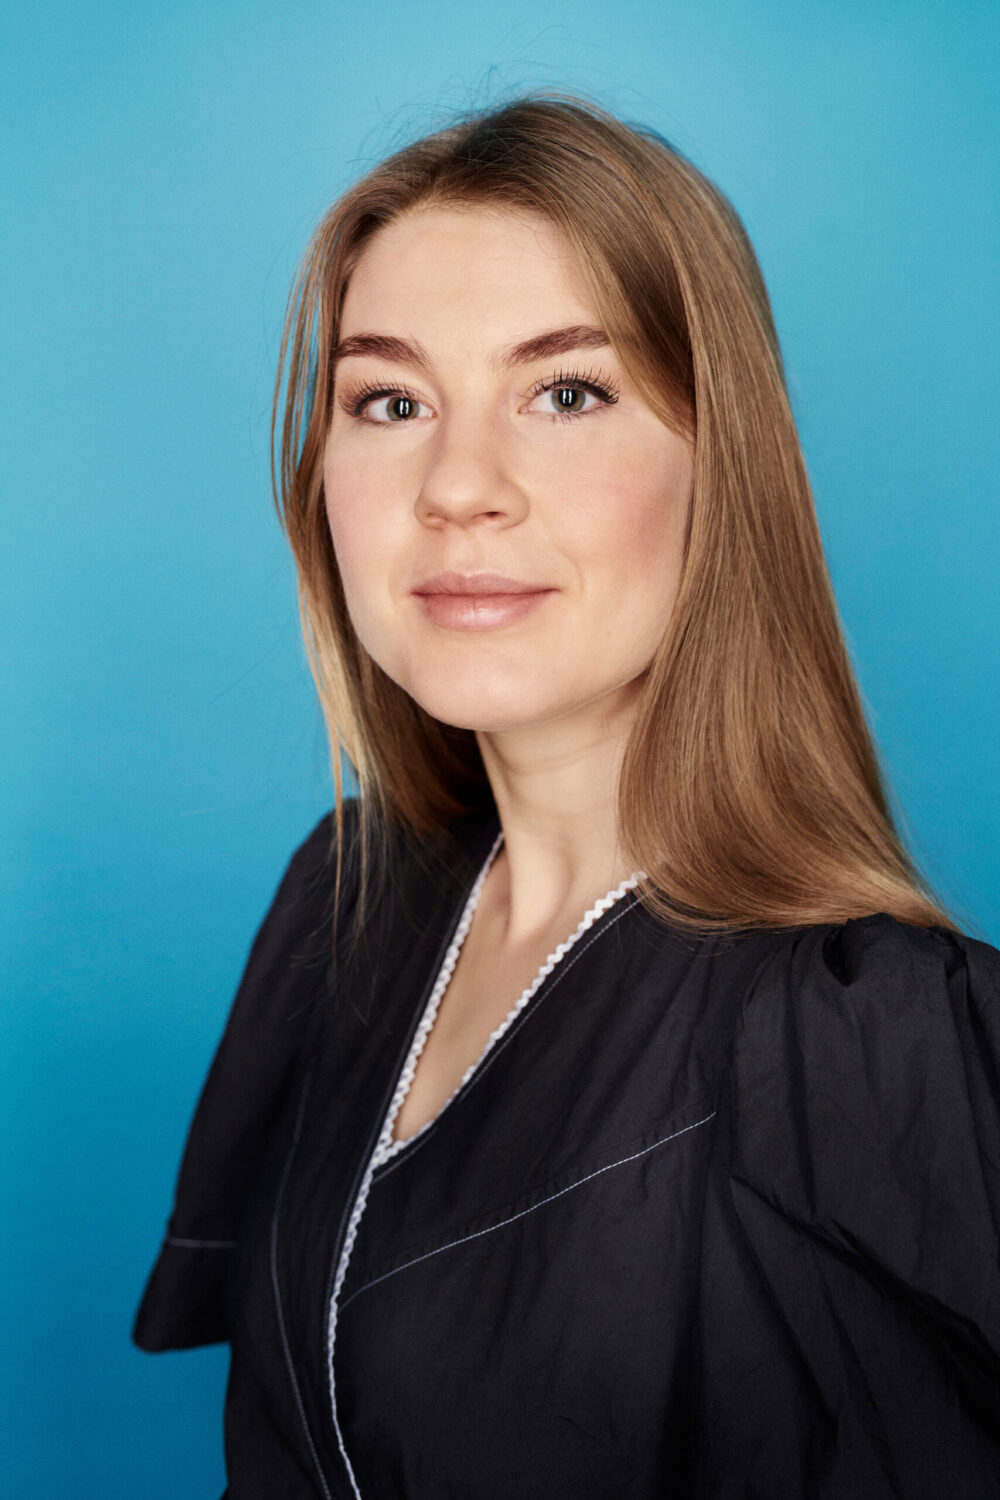 Maria Vestergaard, employee at Signum, Student